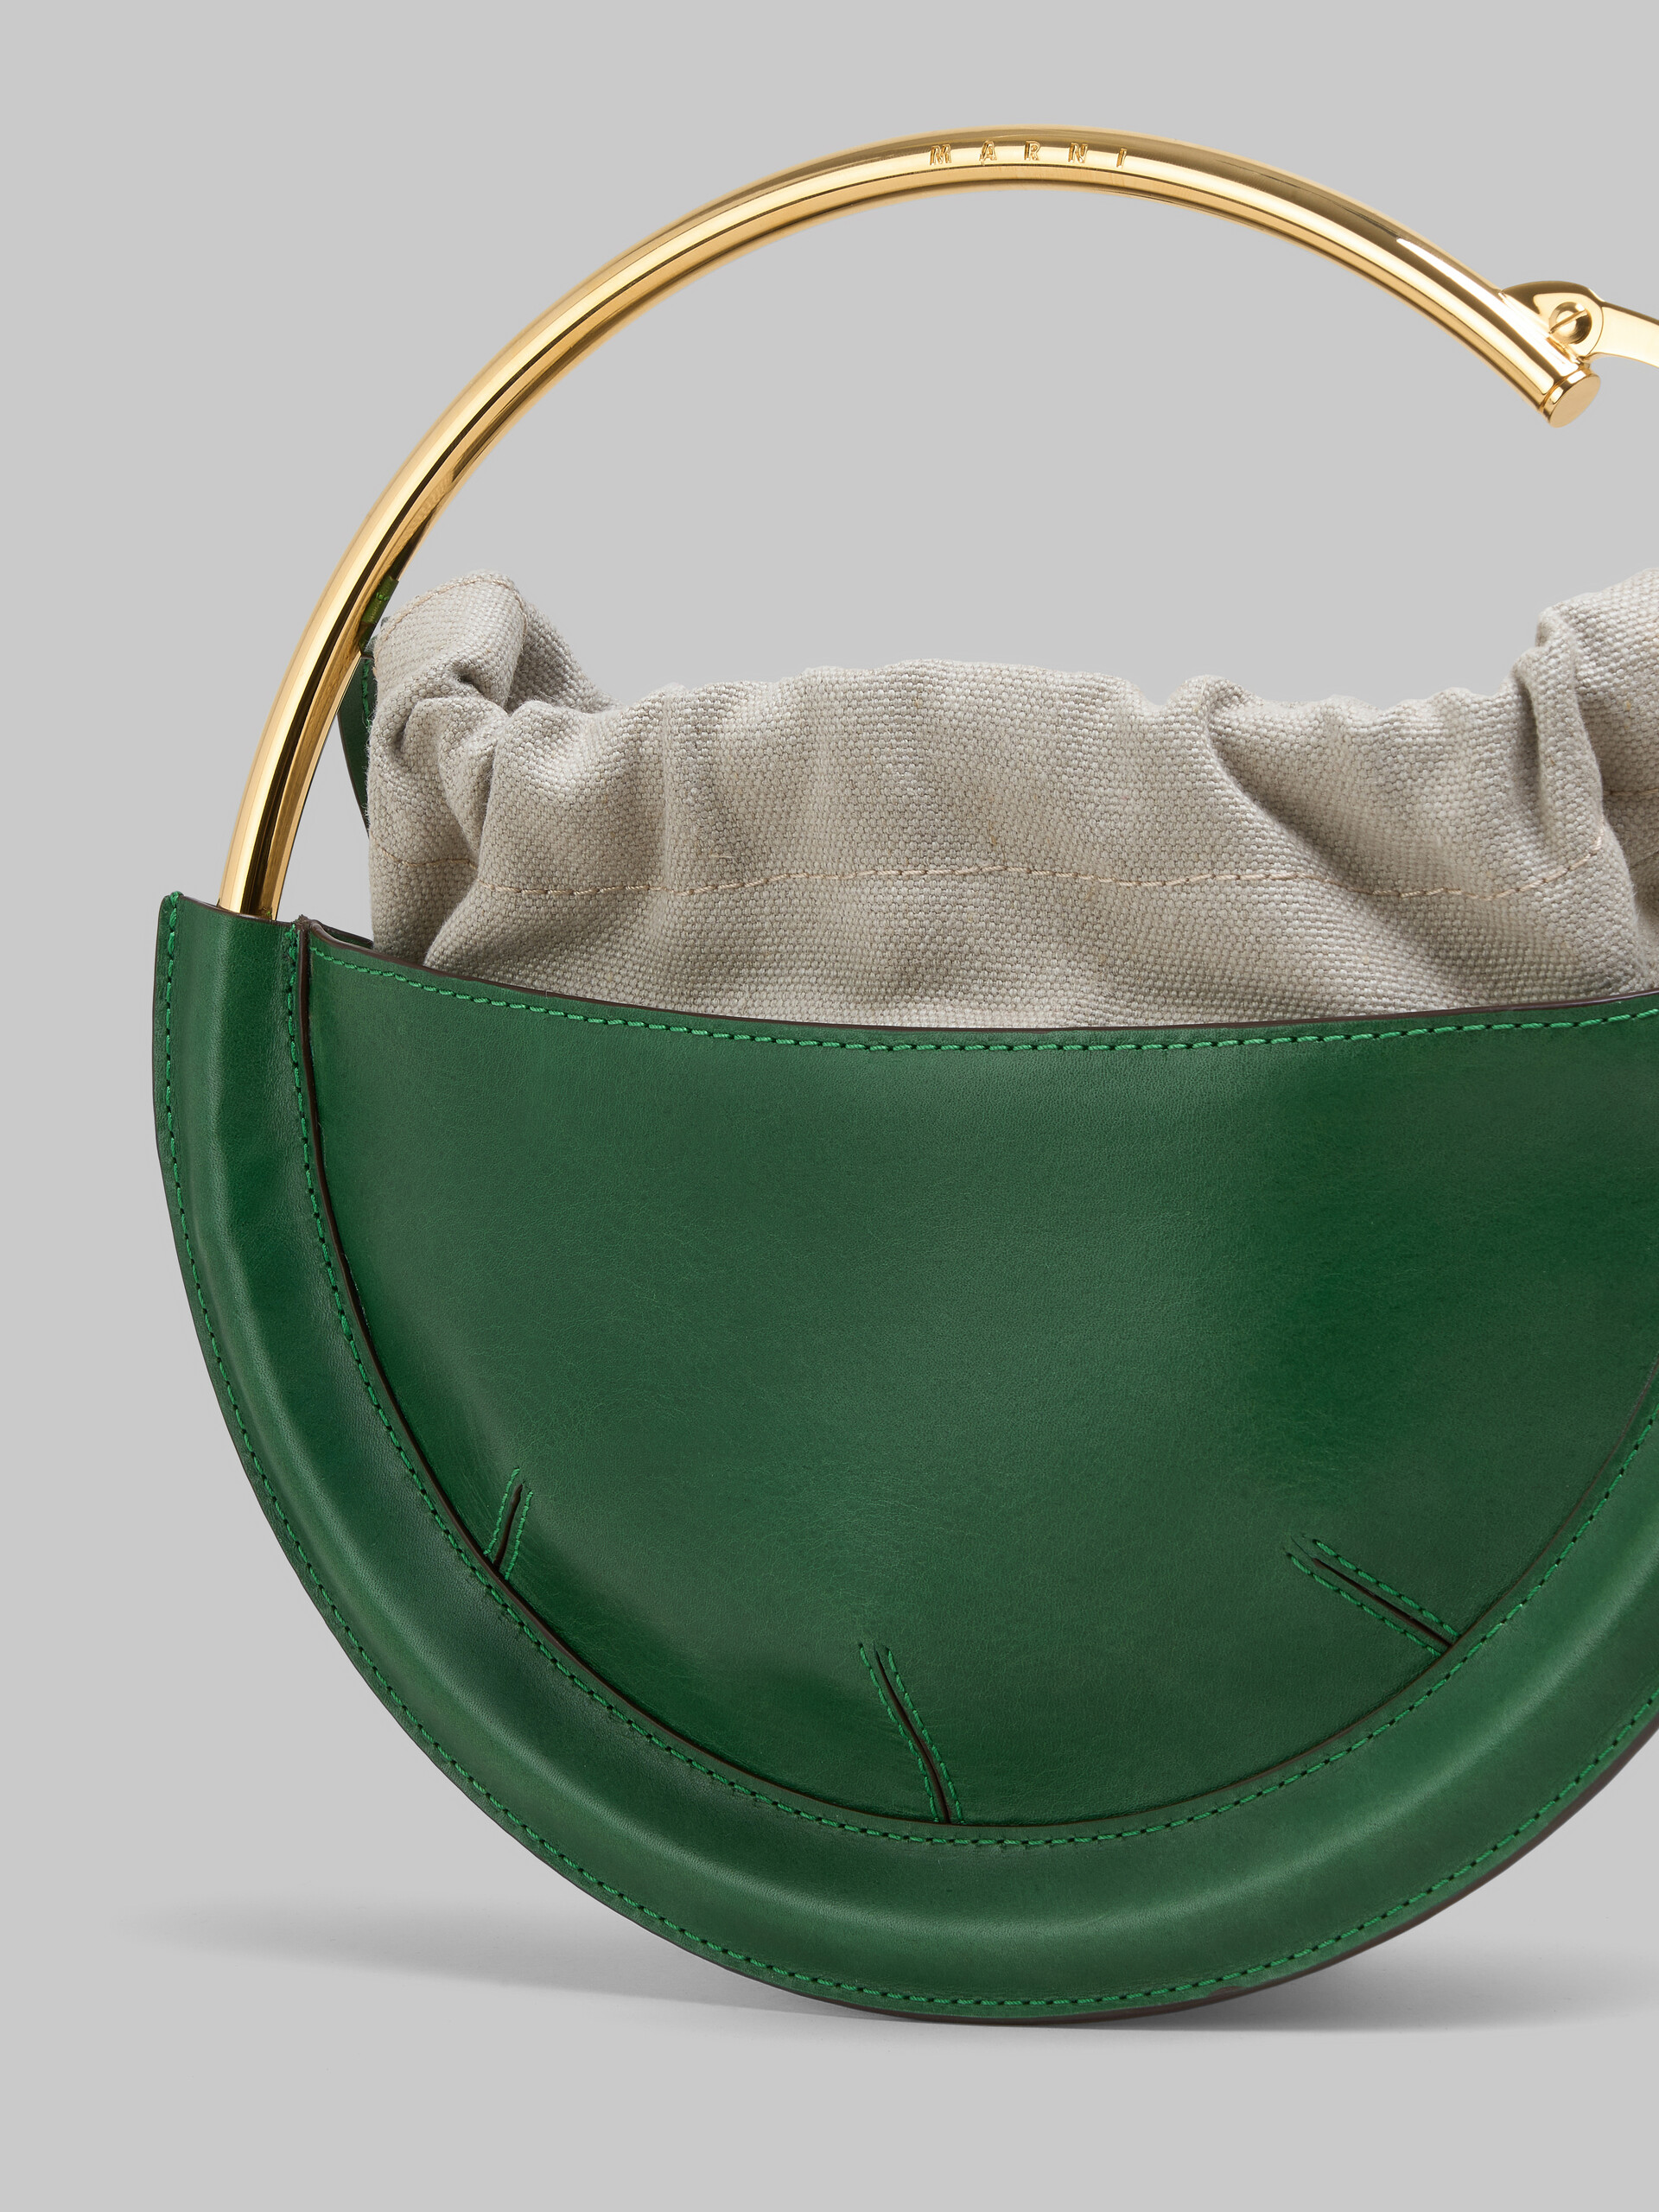 Beige leather small Tunnel hobo bag - Handbags - Image 5